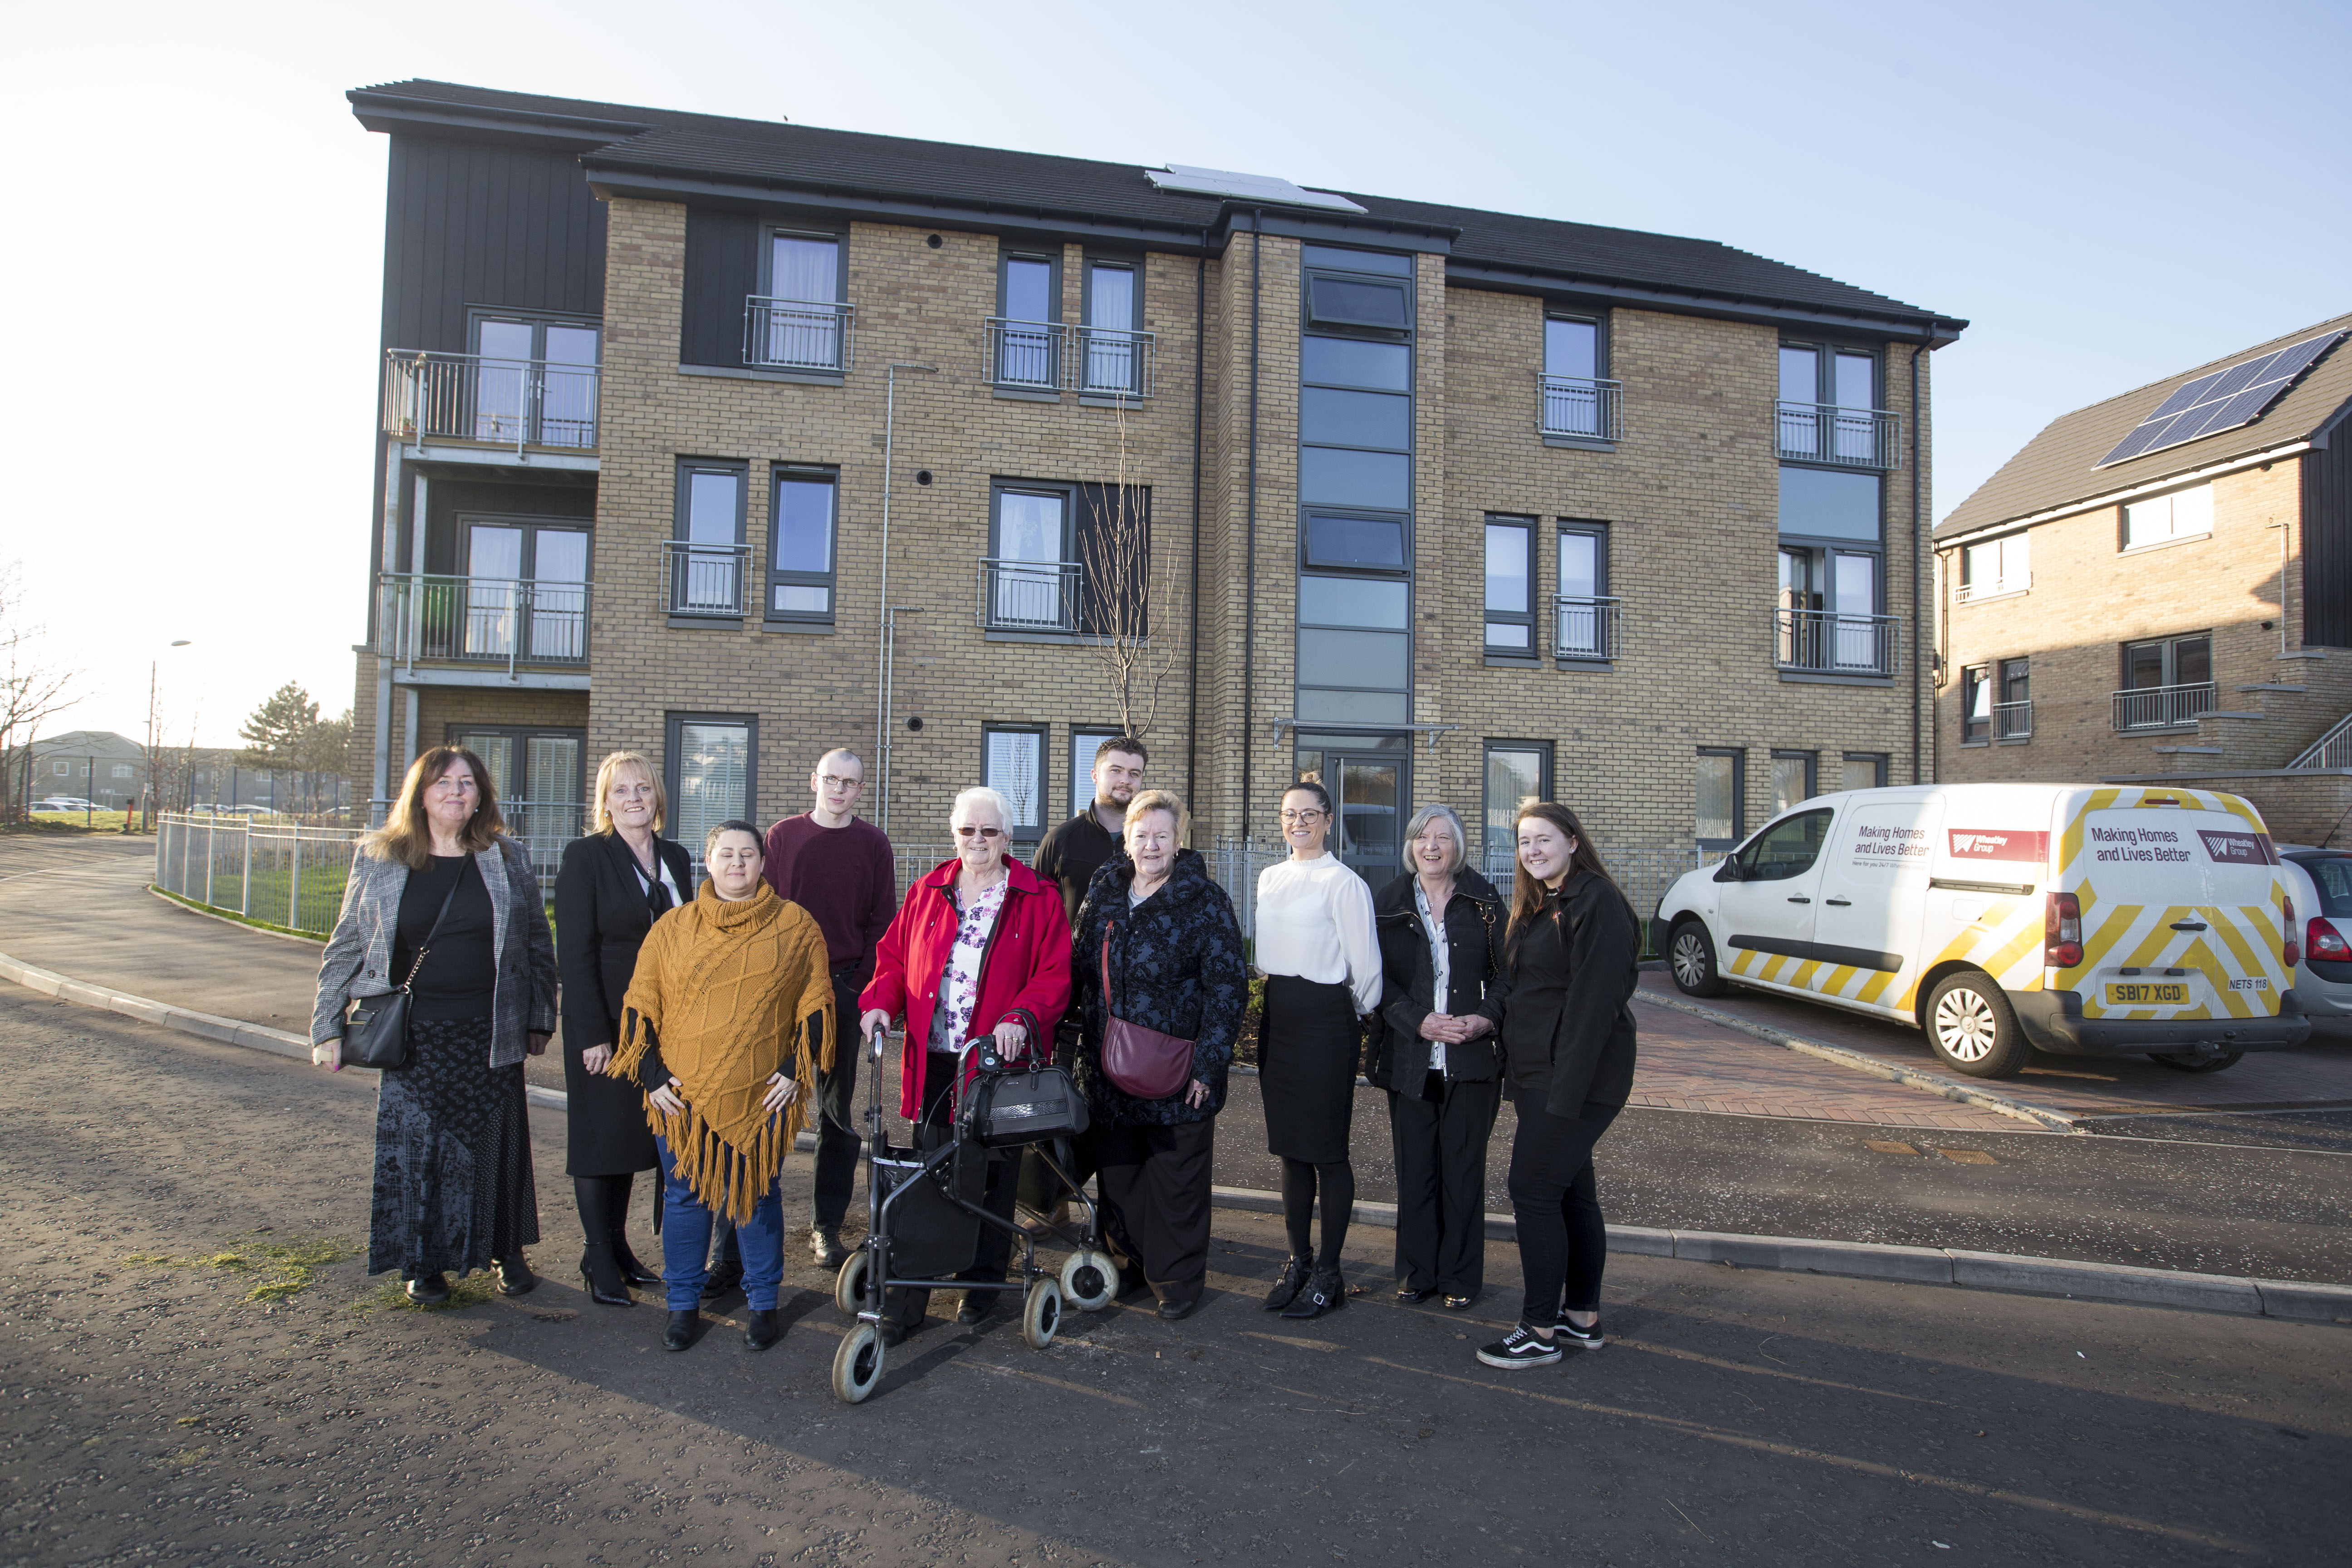 Tenants move into new GHA homes in Cardonald